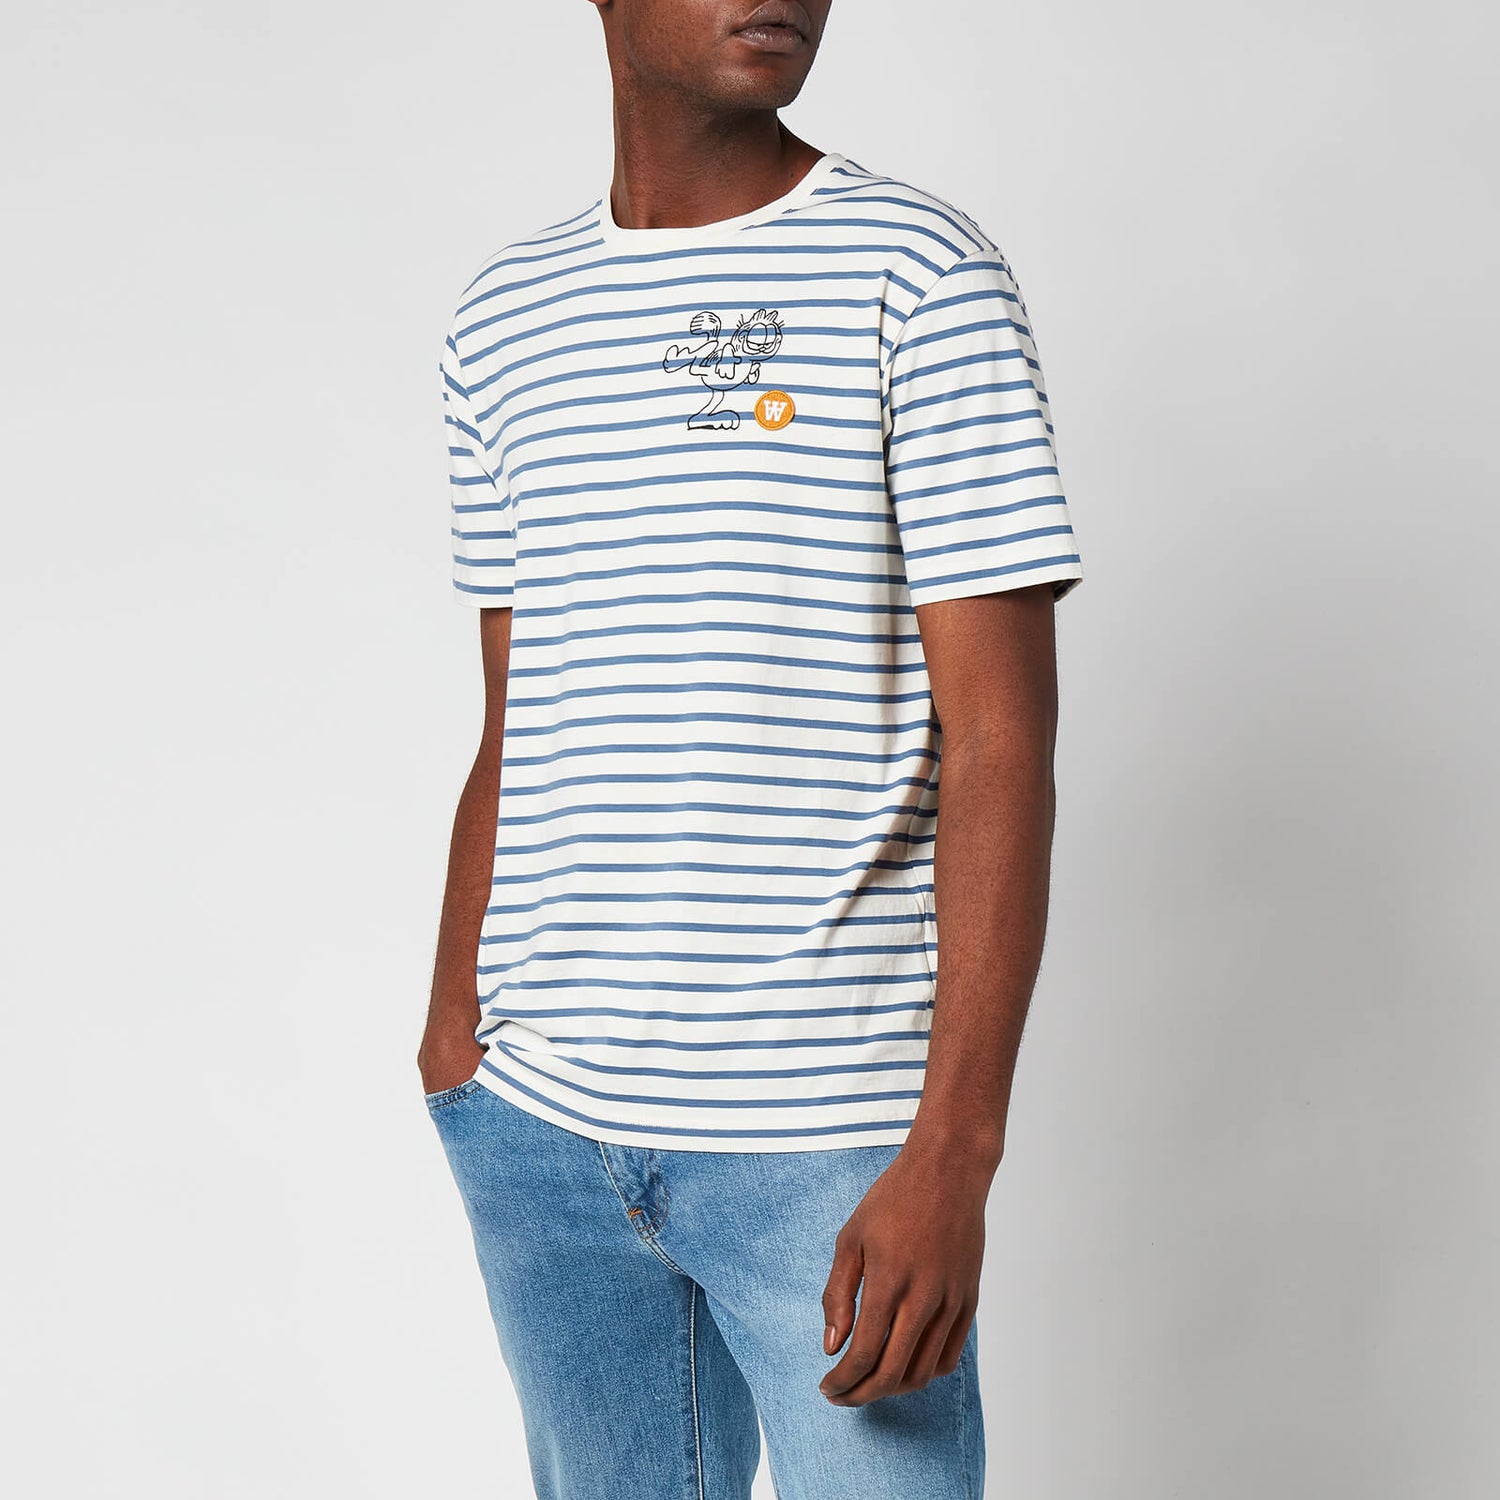 Wood Wood X Garfield Men's Ace Kick Logo T-Shirt - Off White/Blue Stripes - S